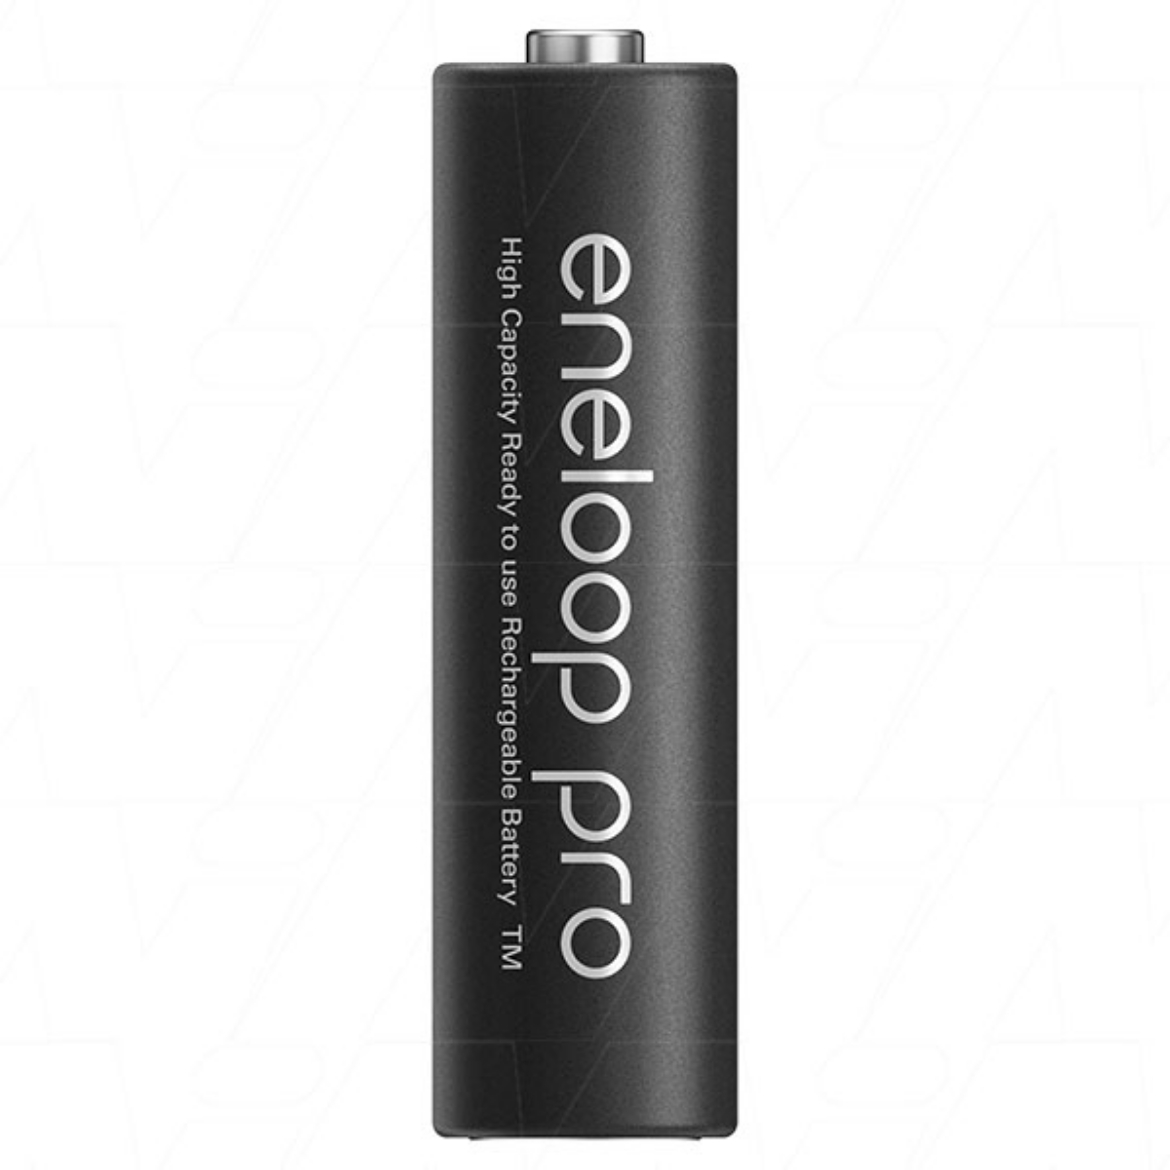 Panasonic Eneloop Pro Rechargeable AA Ni-MH Batteries with